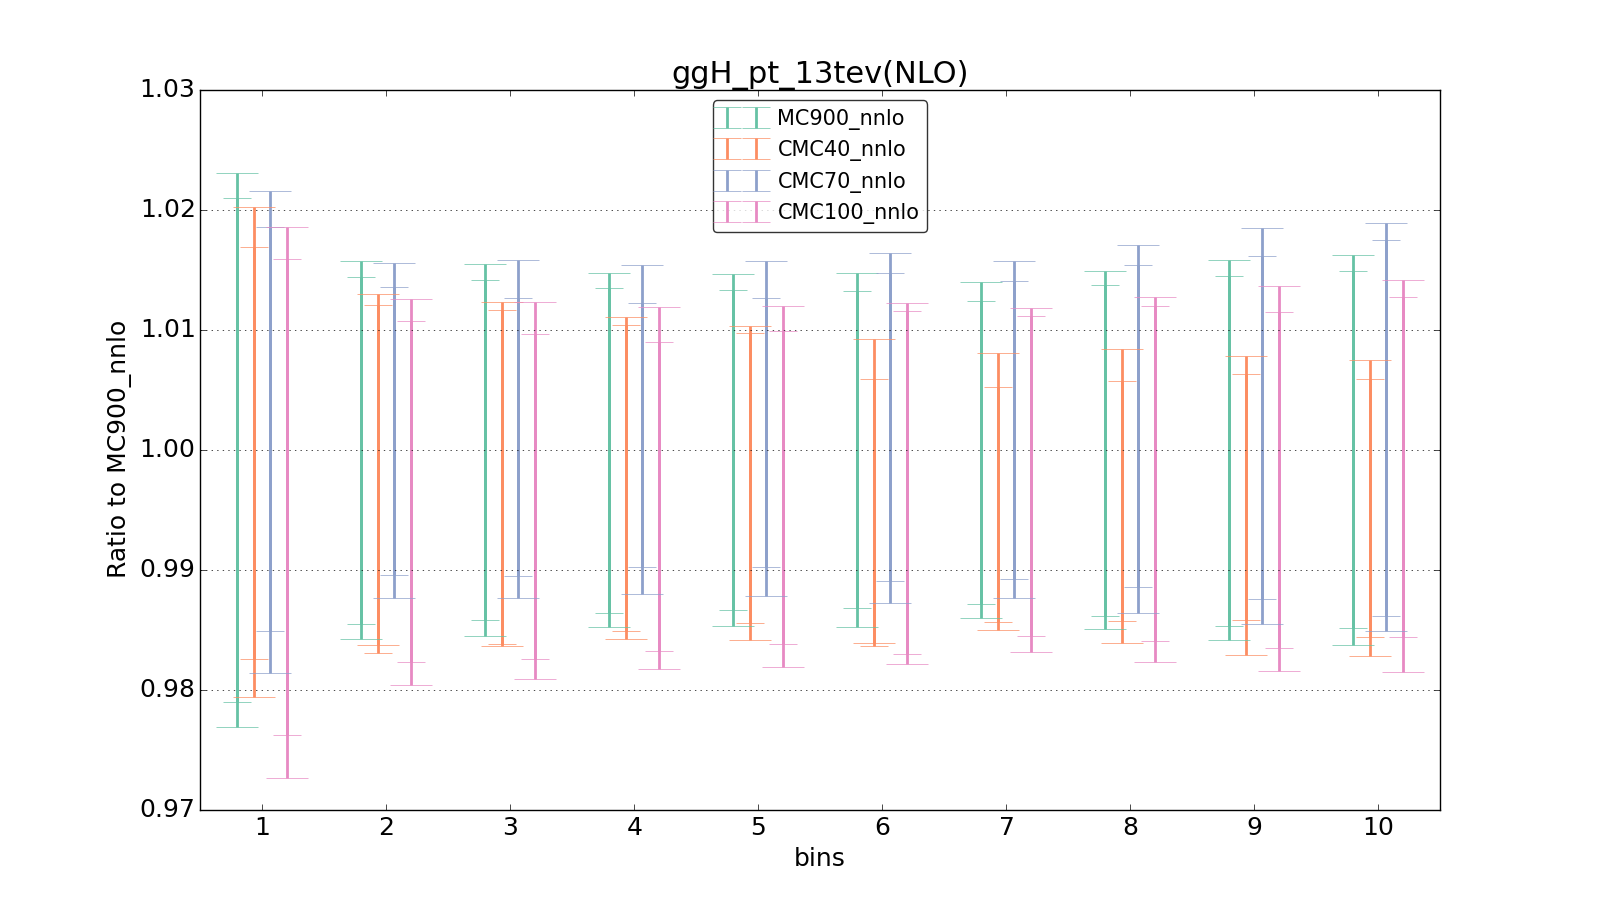 figure plots/CMCpheno/group_0_ciplot_ggH_pt_13tev(NLO).png